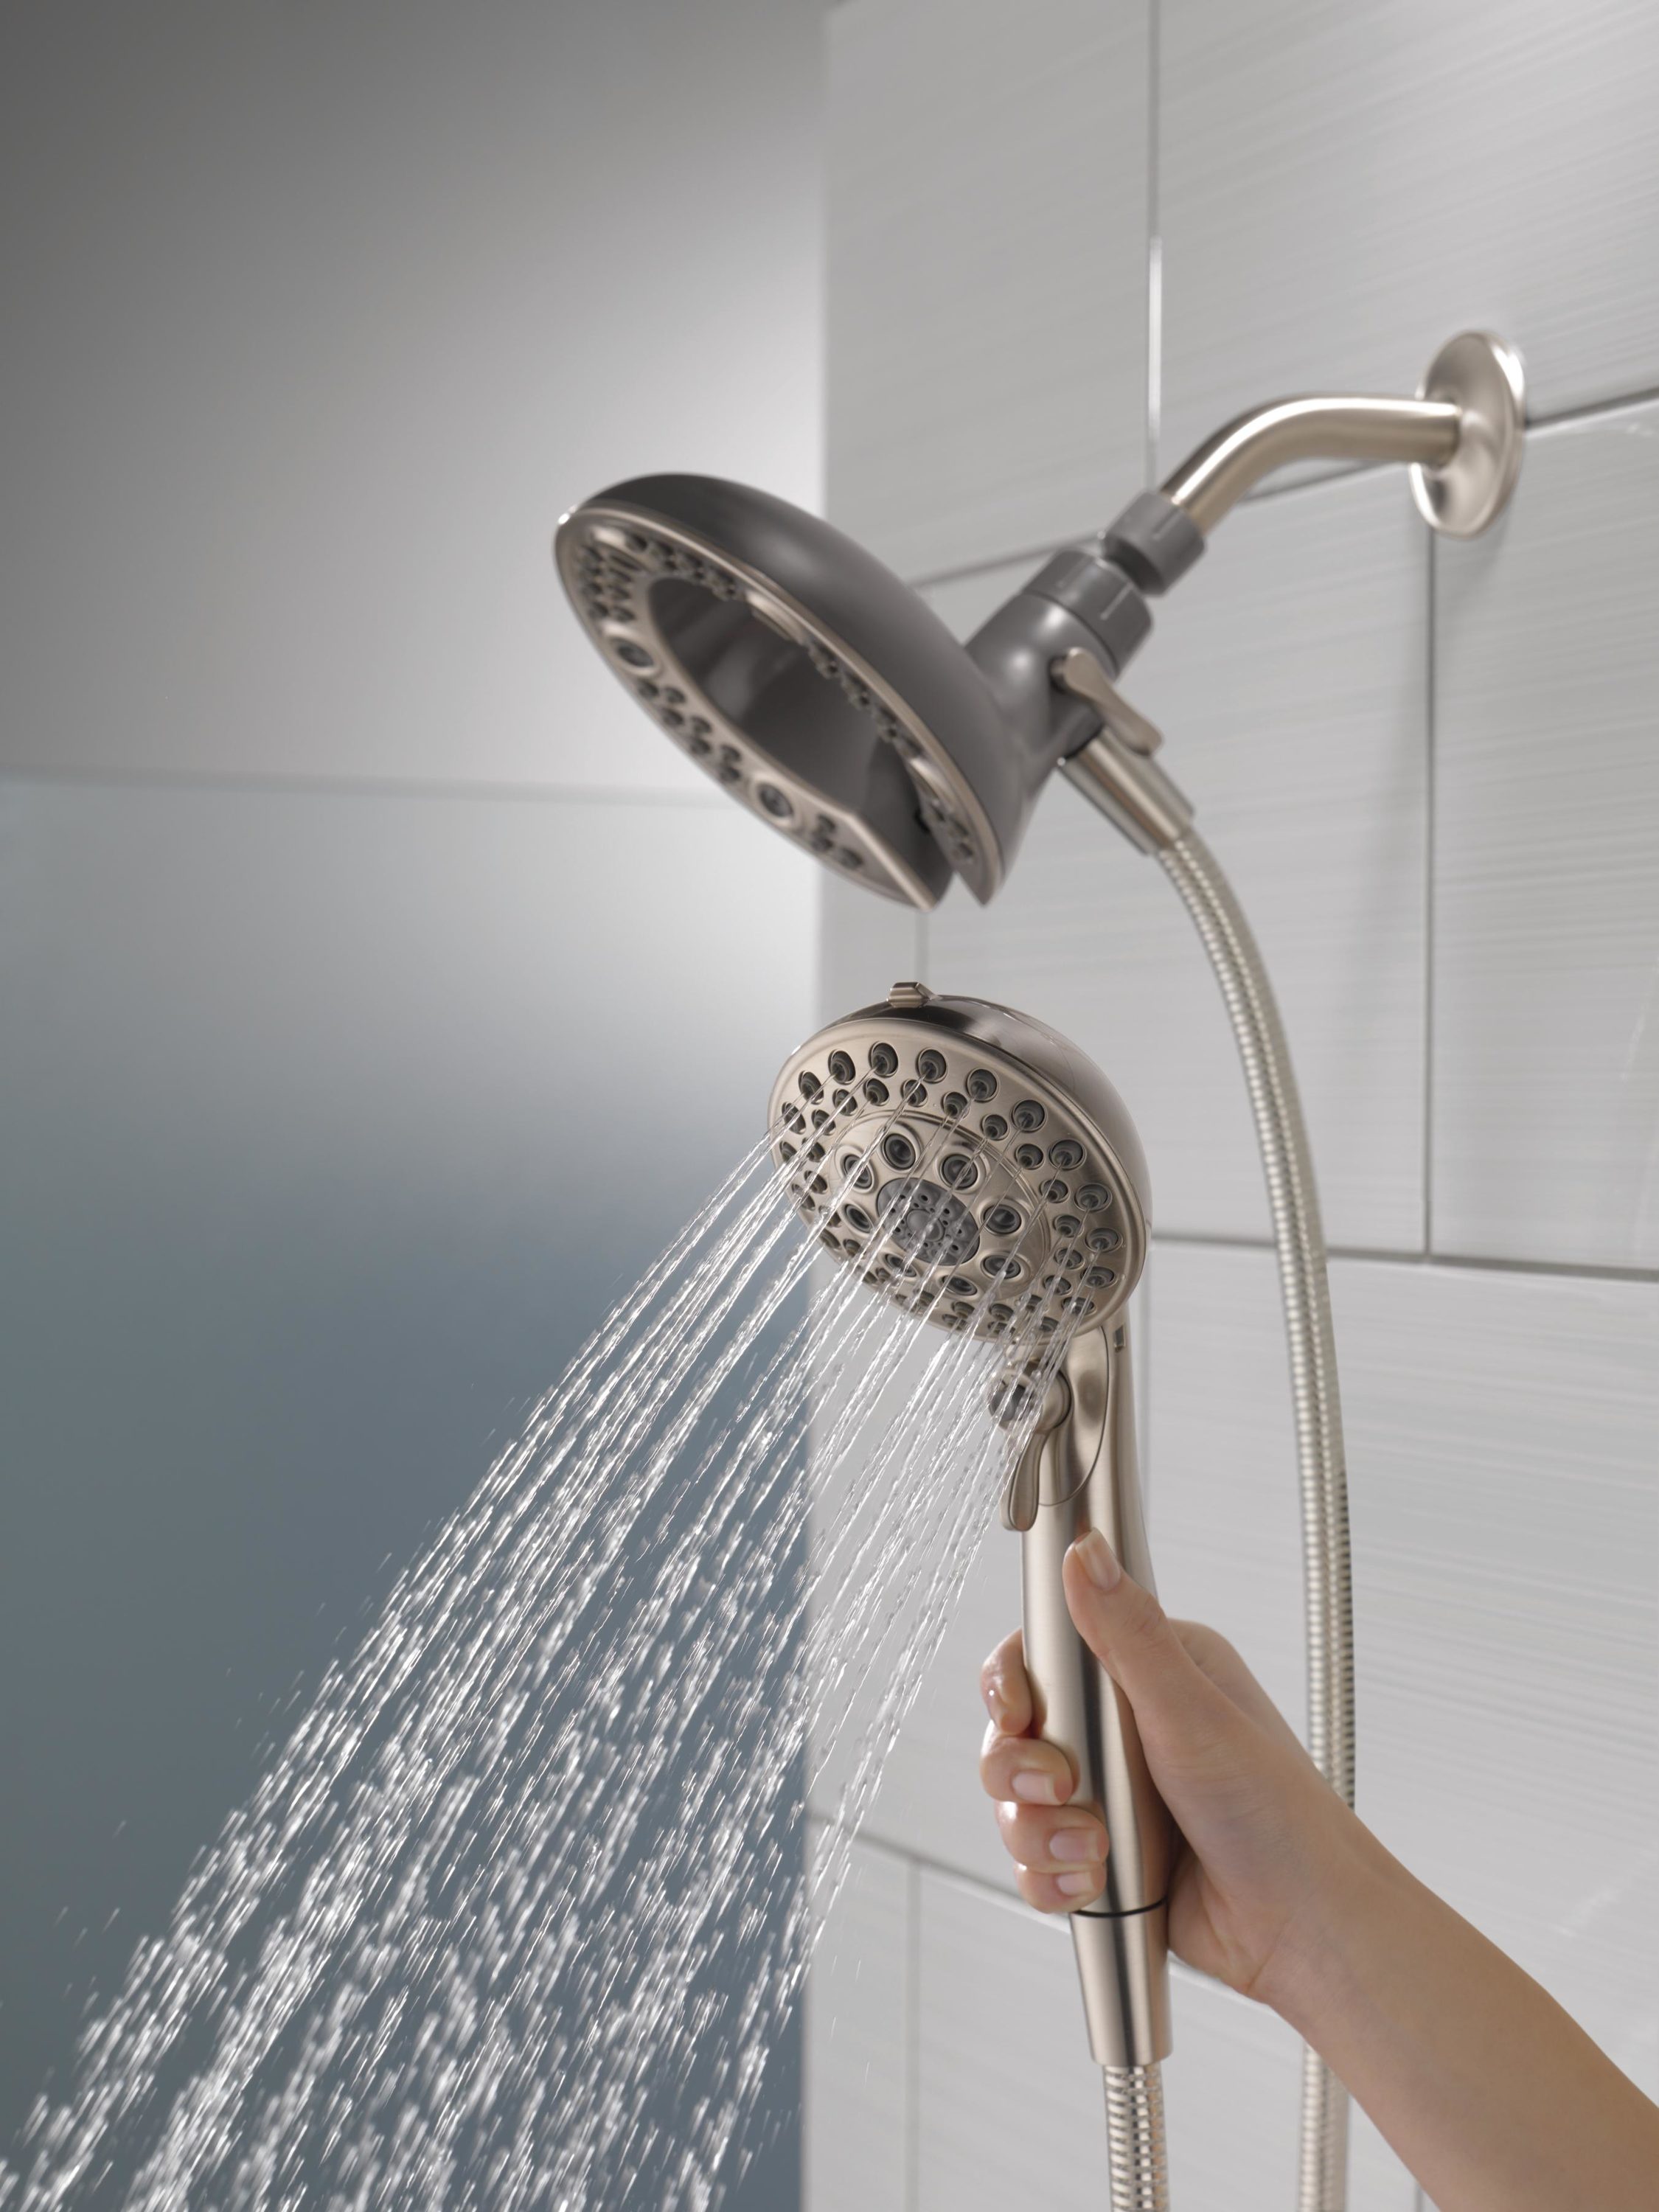 Shower and Tub Tab Kit - Sinus - Crafter's Choice - Kits - Not Bar Soap - 2.00 lb - 1 Kit